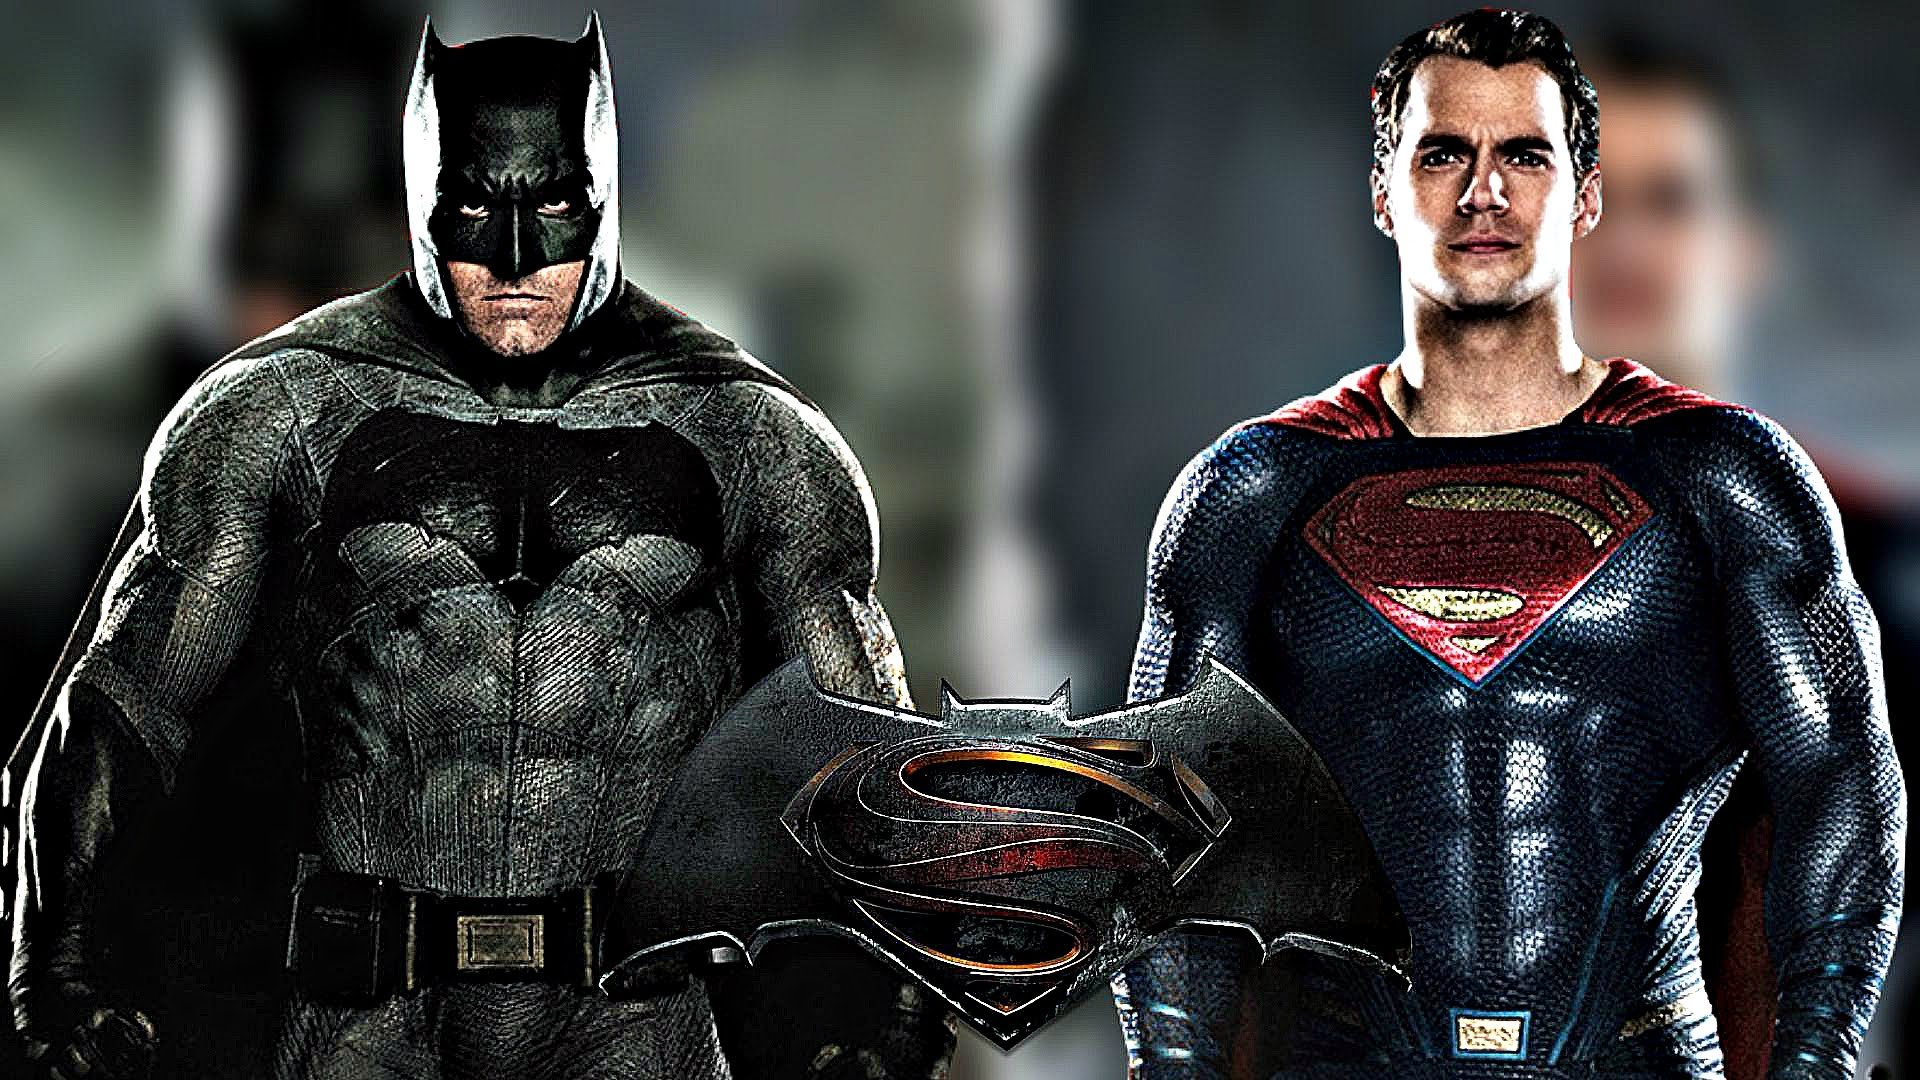 Batman And Superman Wallpaper Background Hd Download Free Pixelstalk Net